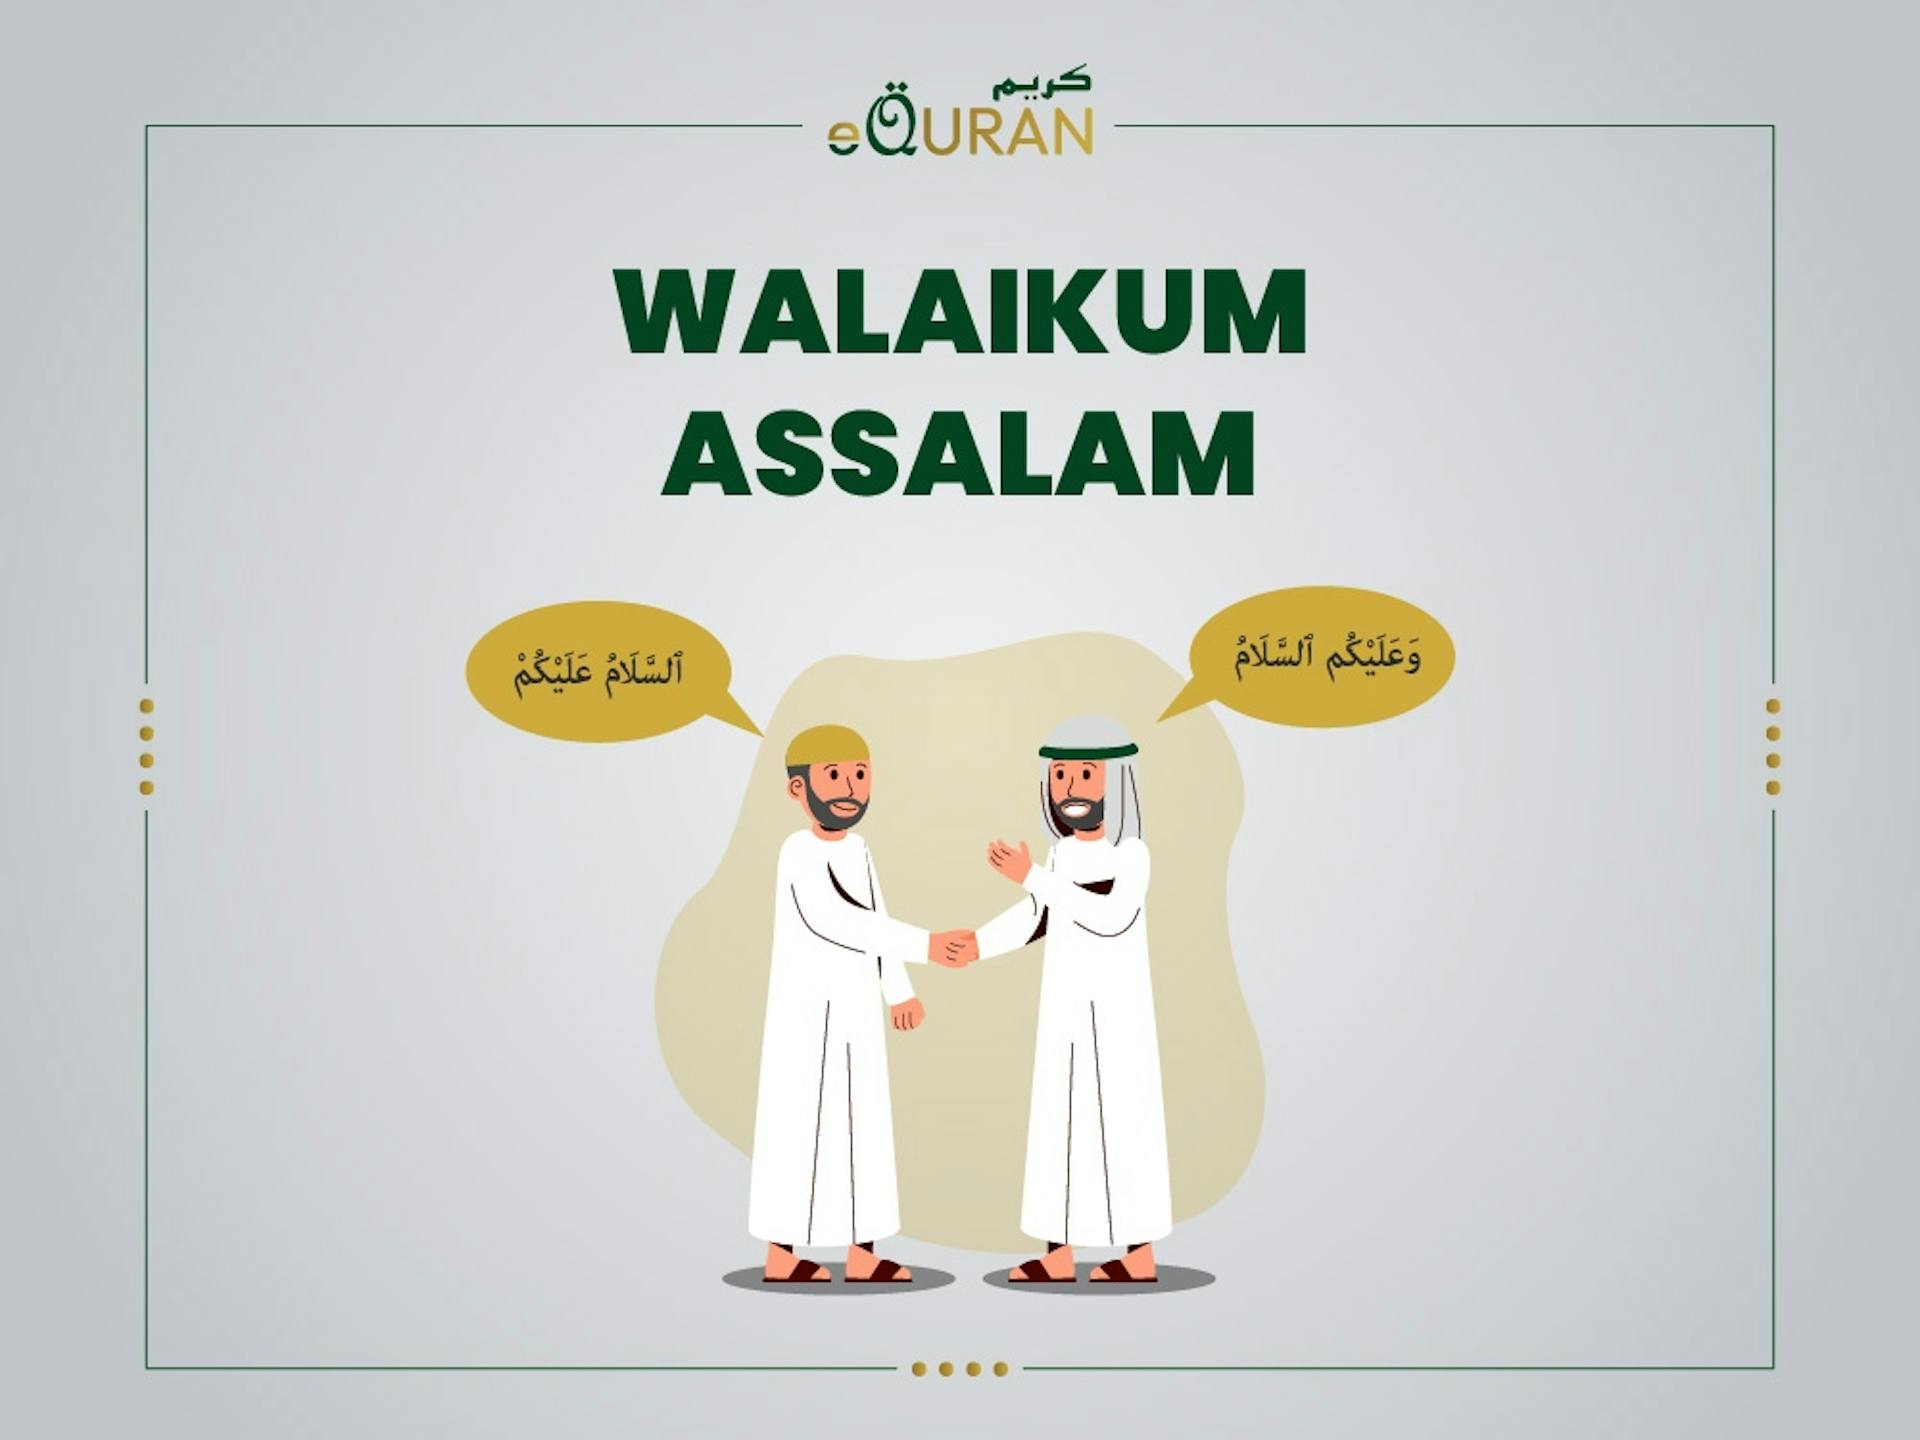 walaikum assalam, Assalamualaikum reply is walaikum assalam or saying Waalaikumsalam warahmatullahi wa barakatuh.